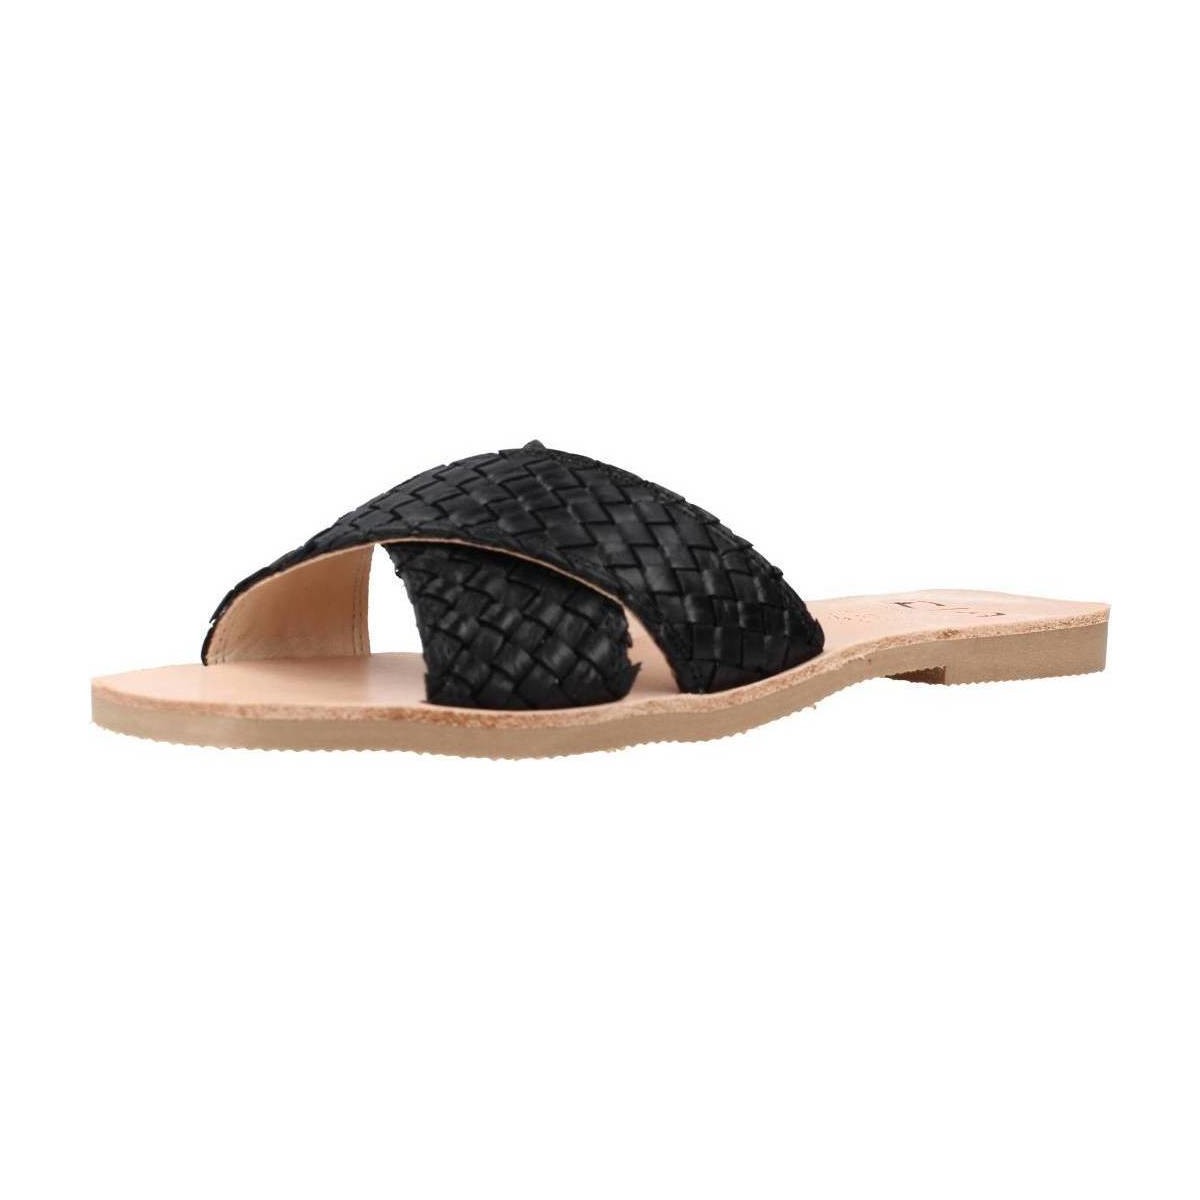 Schoenen Sandalen / Open schoenen Ria 40418 W Zwart